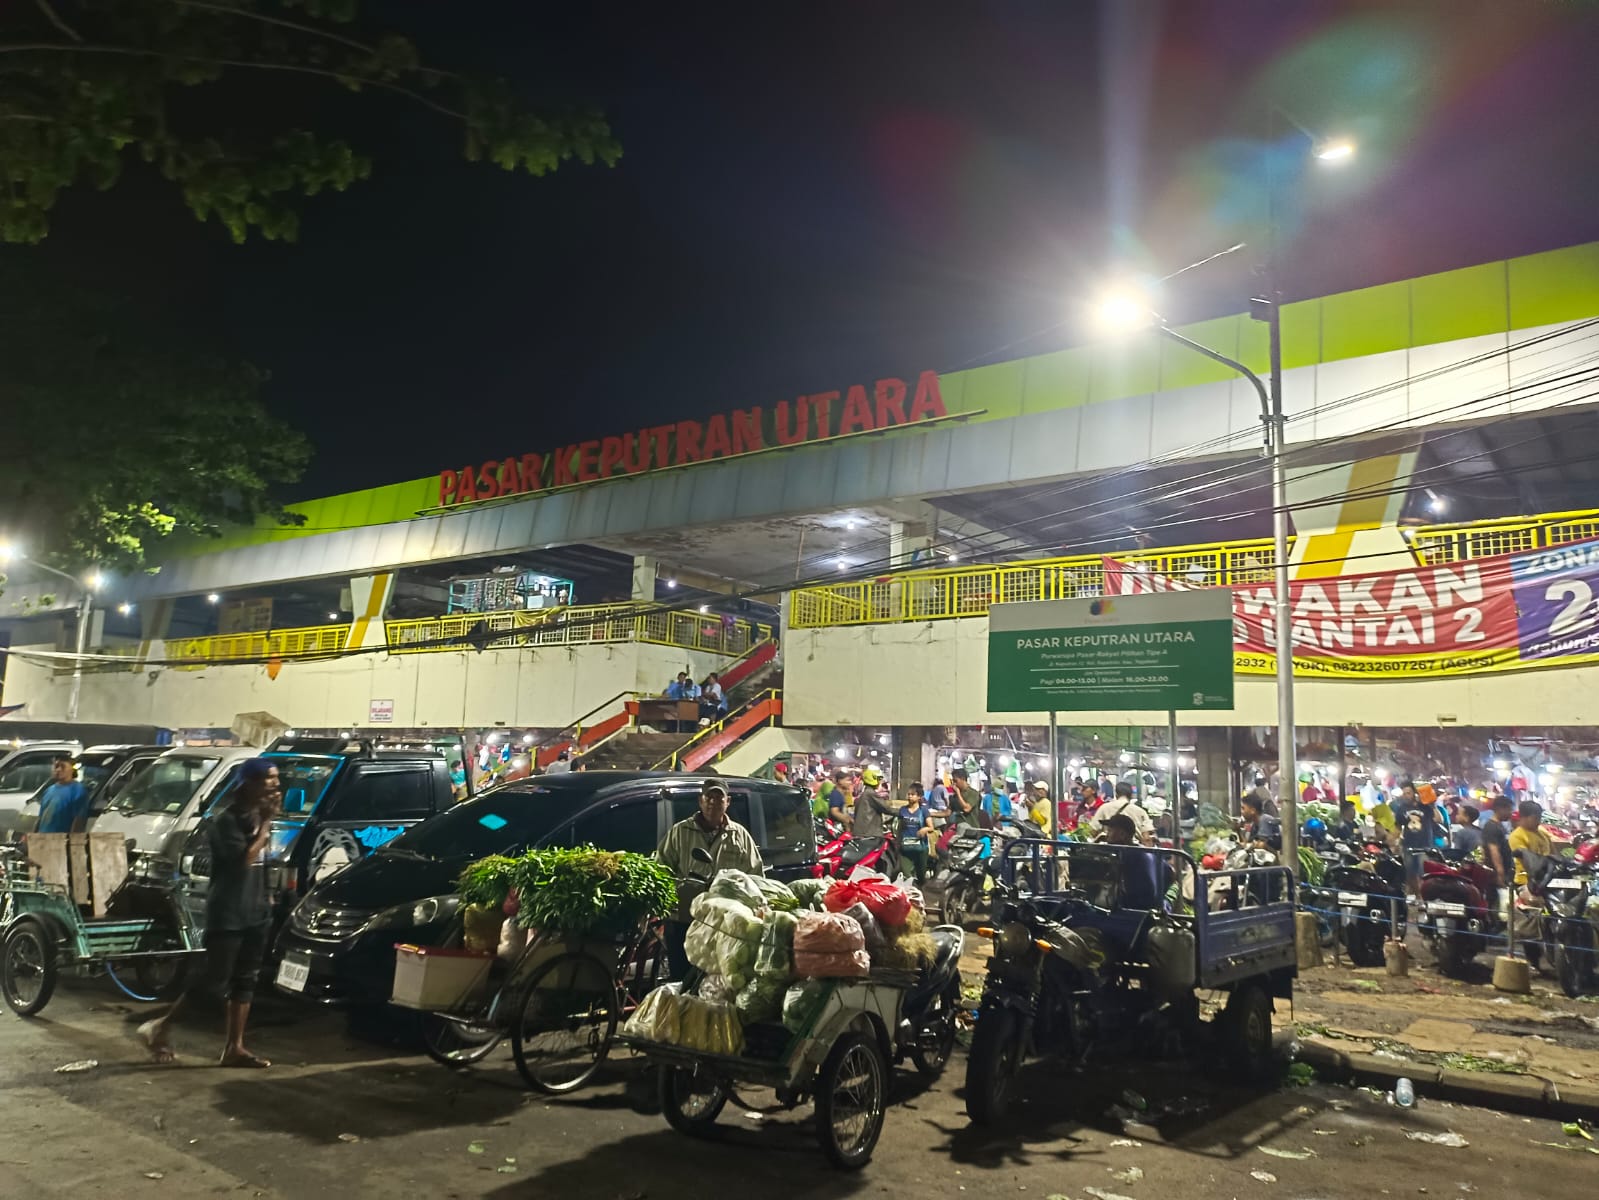 PD Pasar Surya Pastikan Lahan Parkir Keputran Utara, Trotoar dan Jalan Steril dari Pedagang